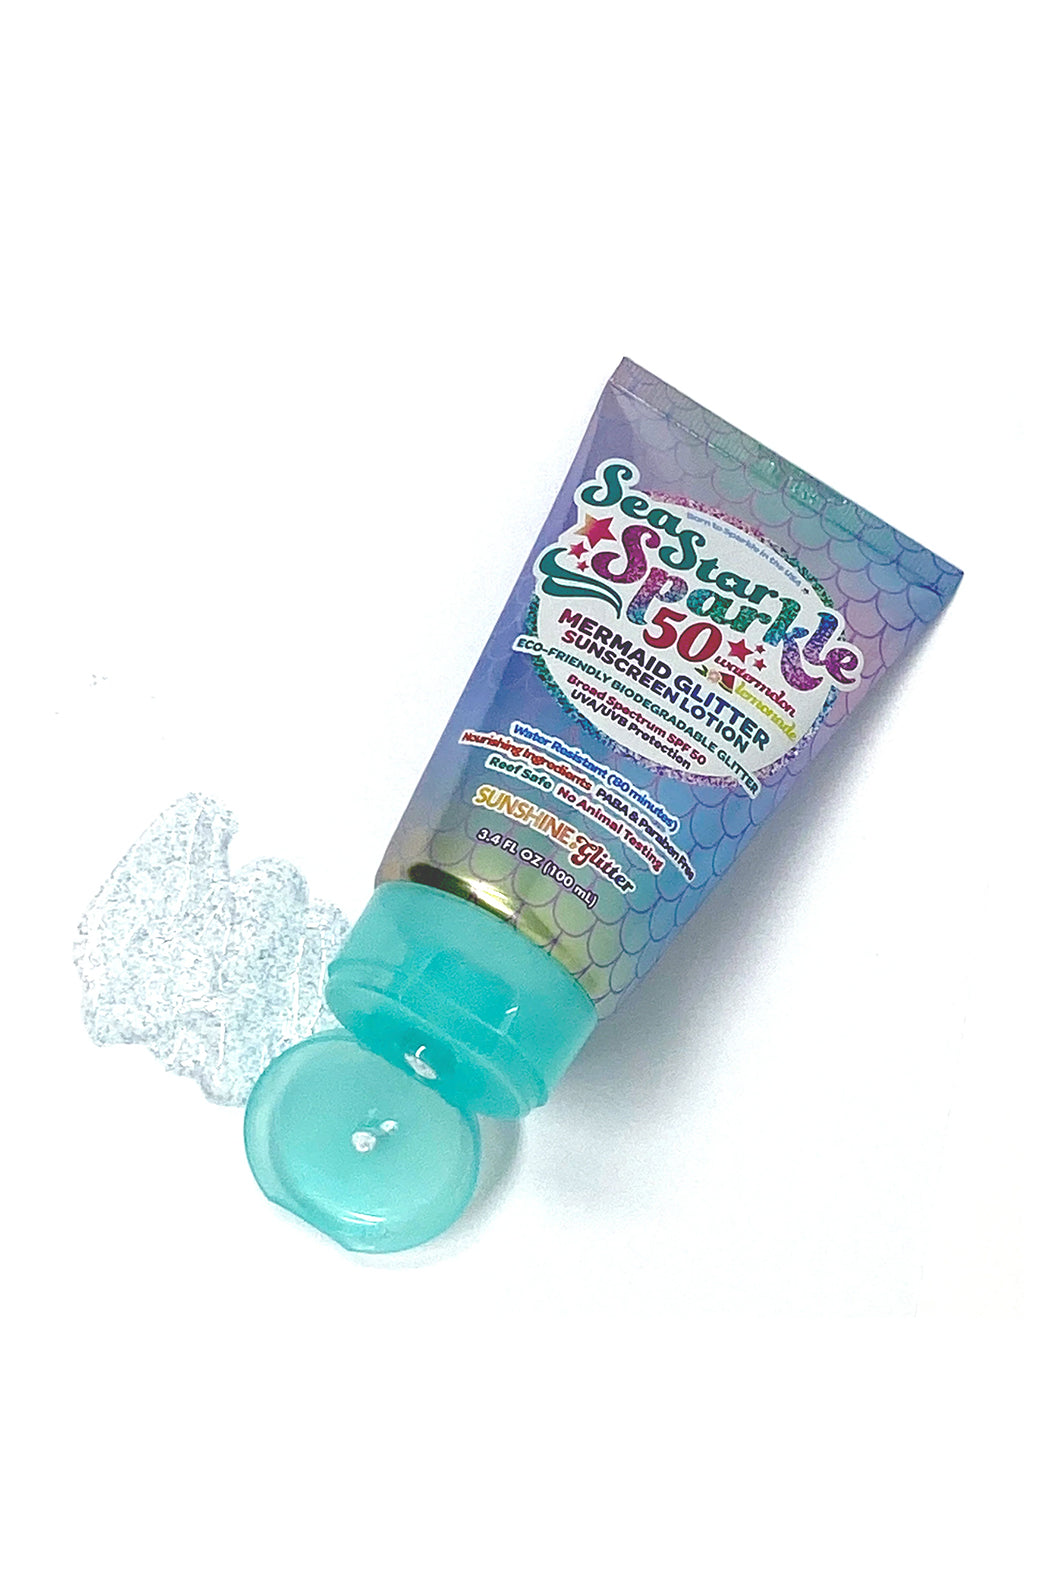 Sea Star Sparkle Watermlon Lemonade Mermaid Glitter Sunscreen - SPF 50